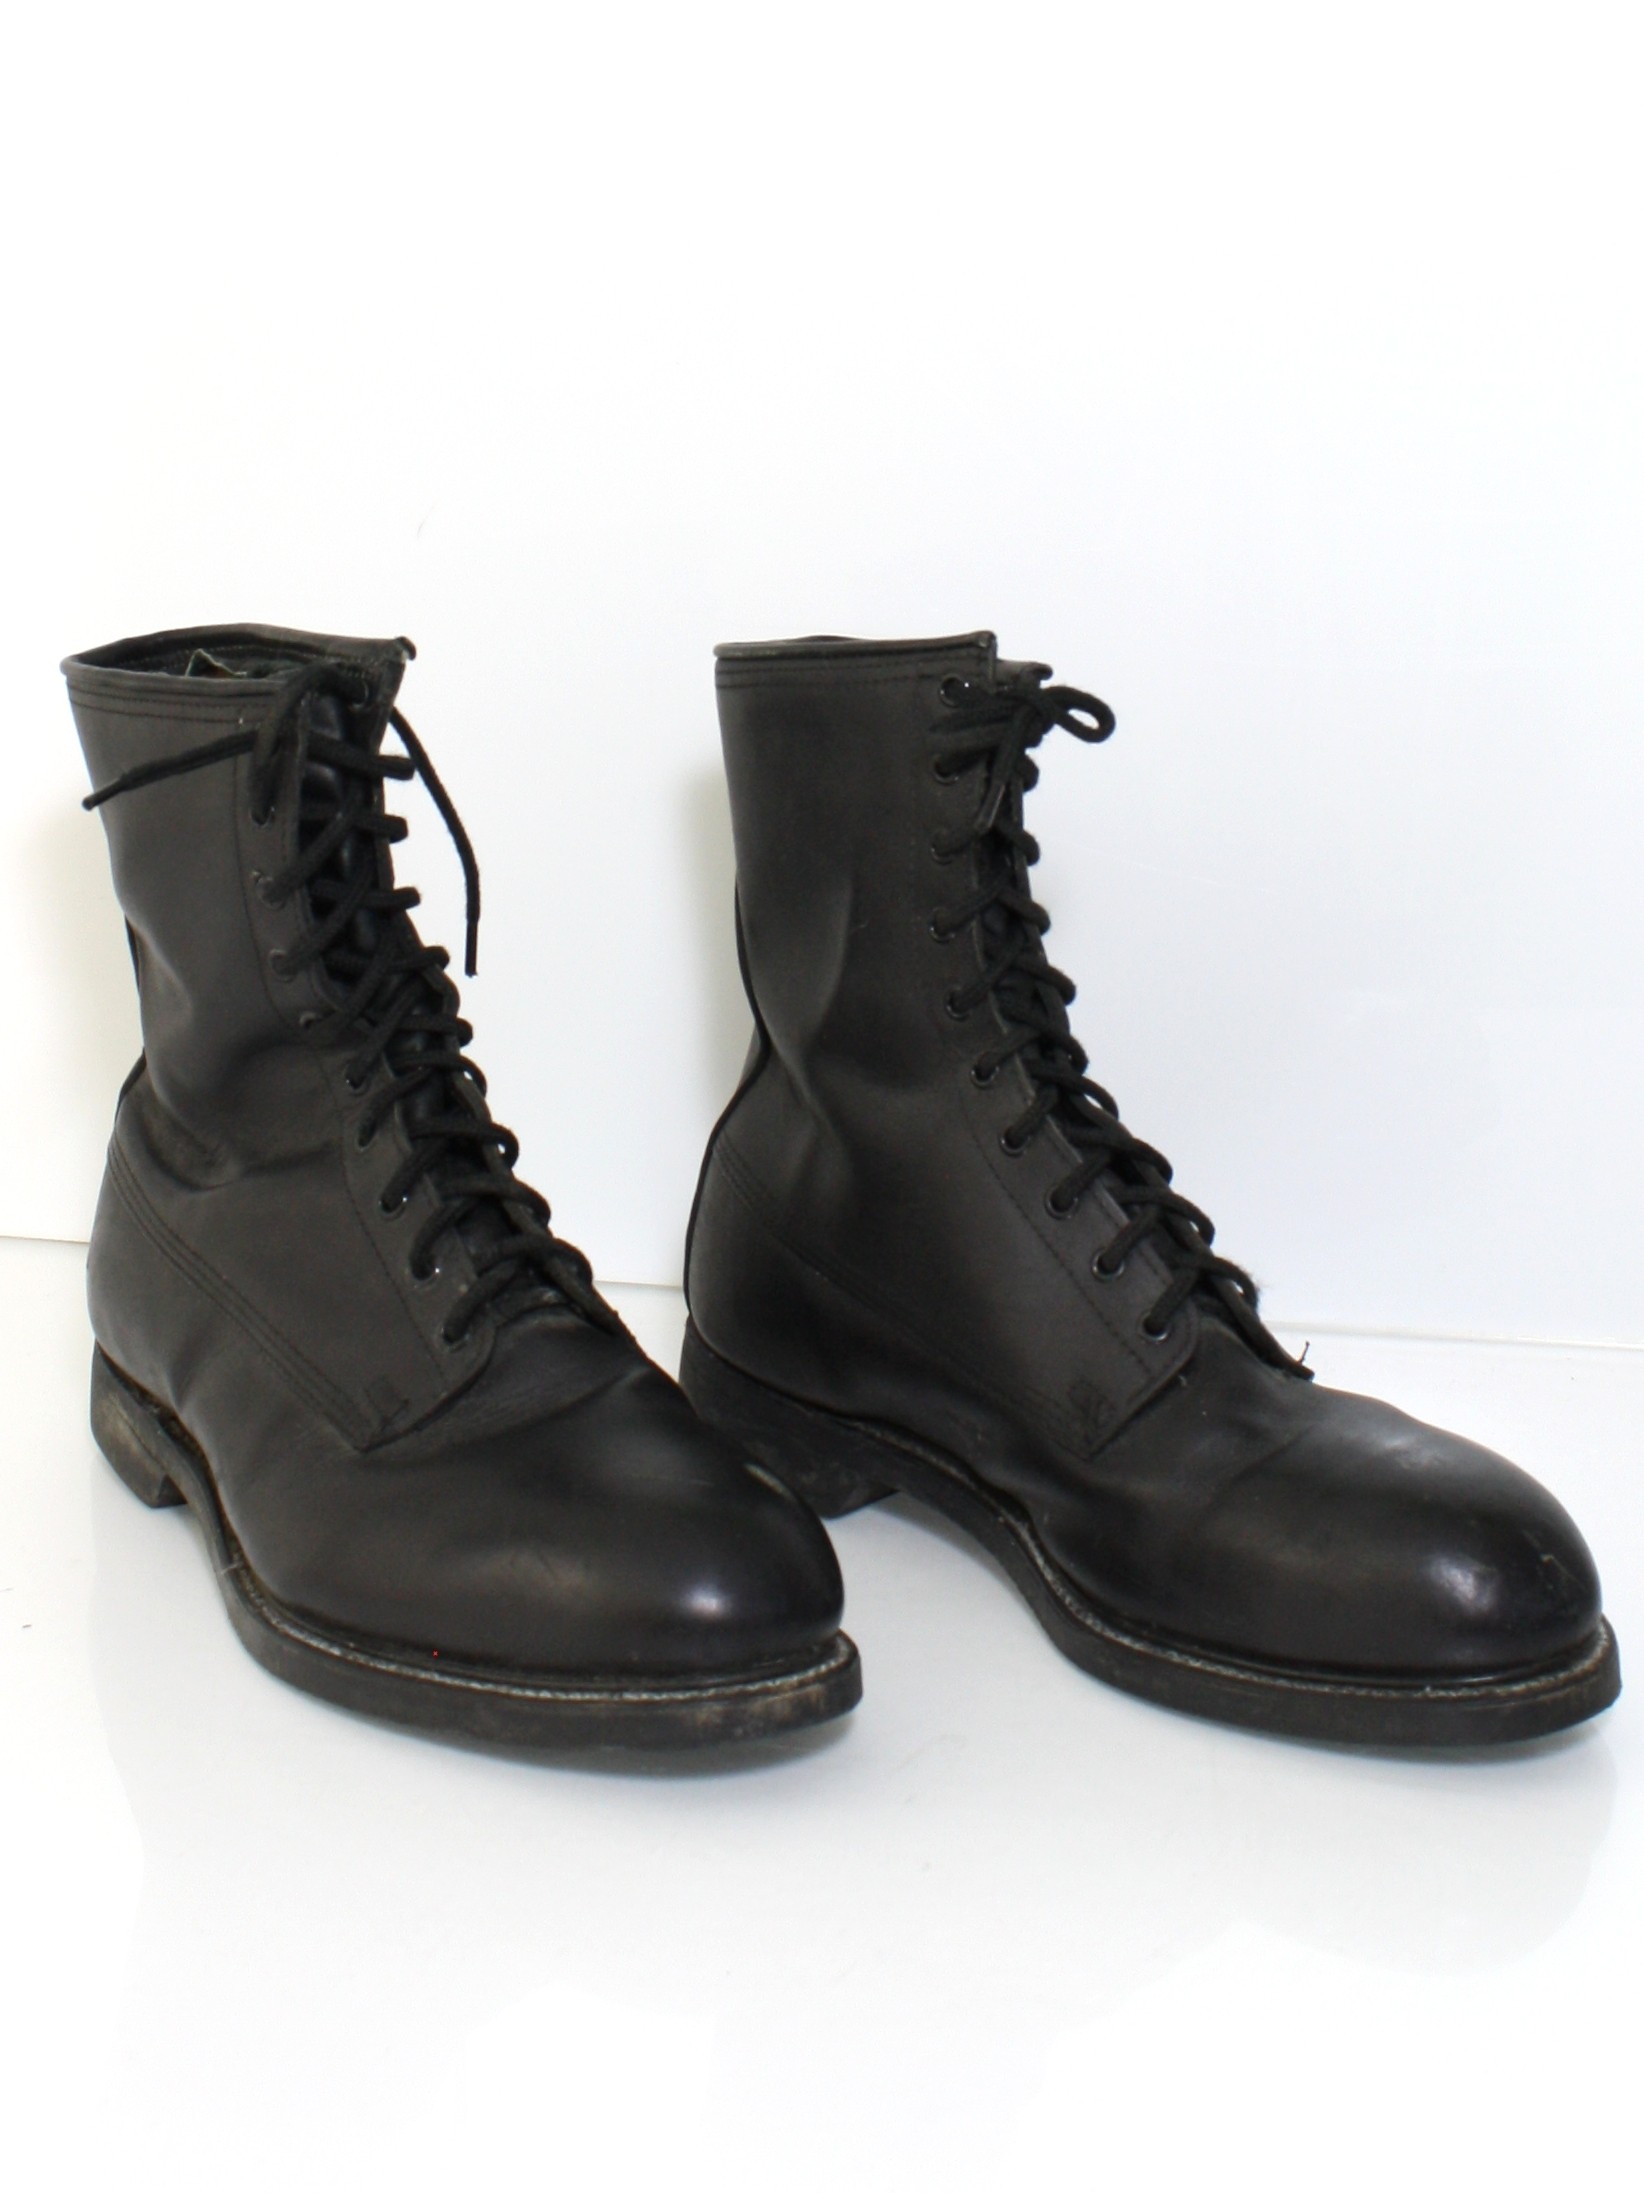 80s combat boots